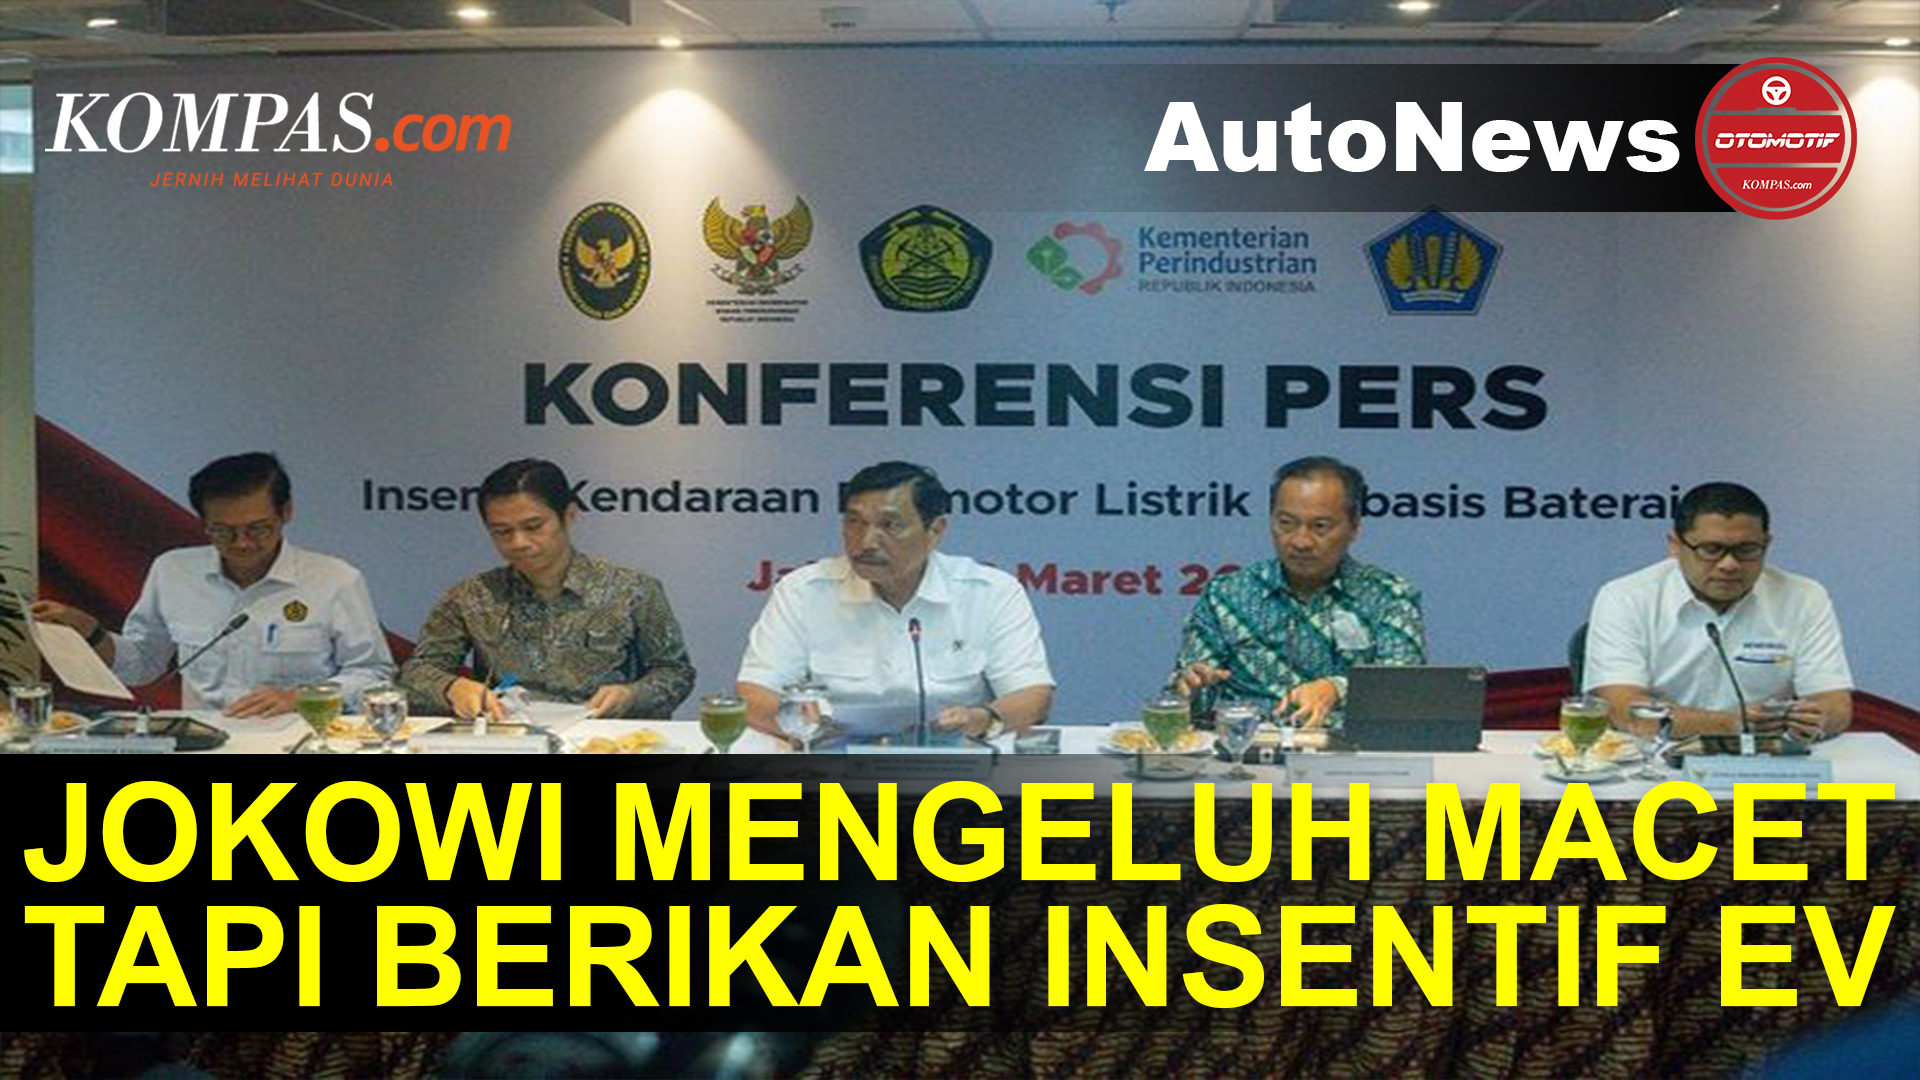 Jokowi Sempat Mengeluh soal Macet, tetapi Tetap Terbitkan Insentif EV